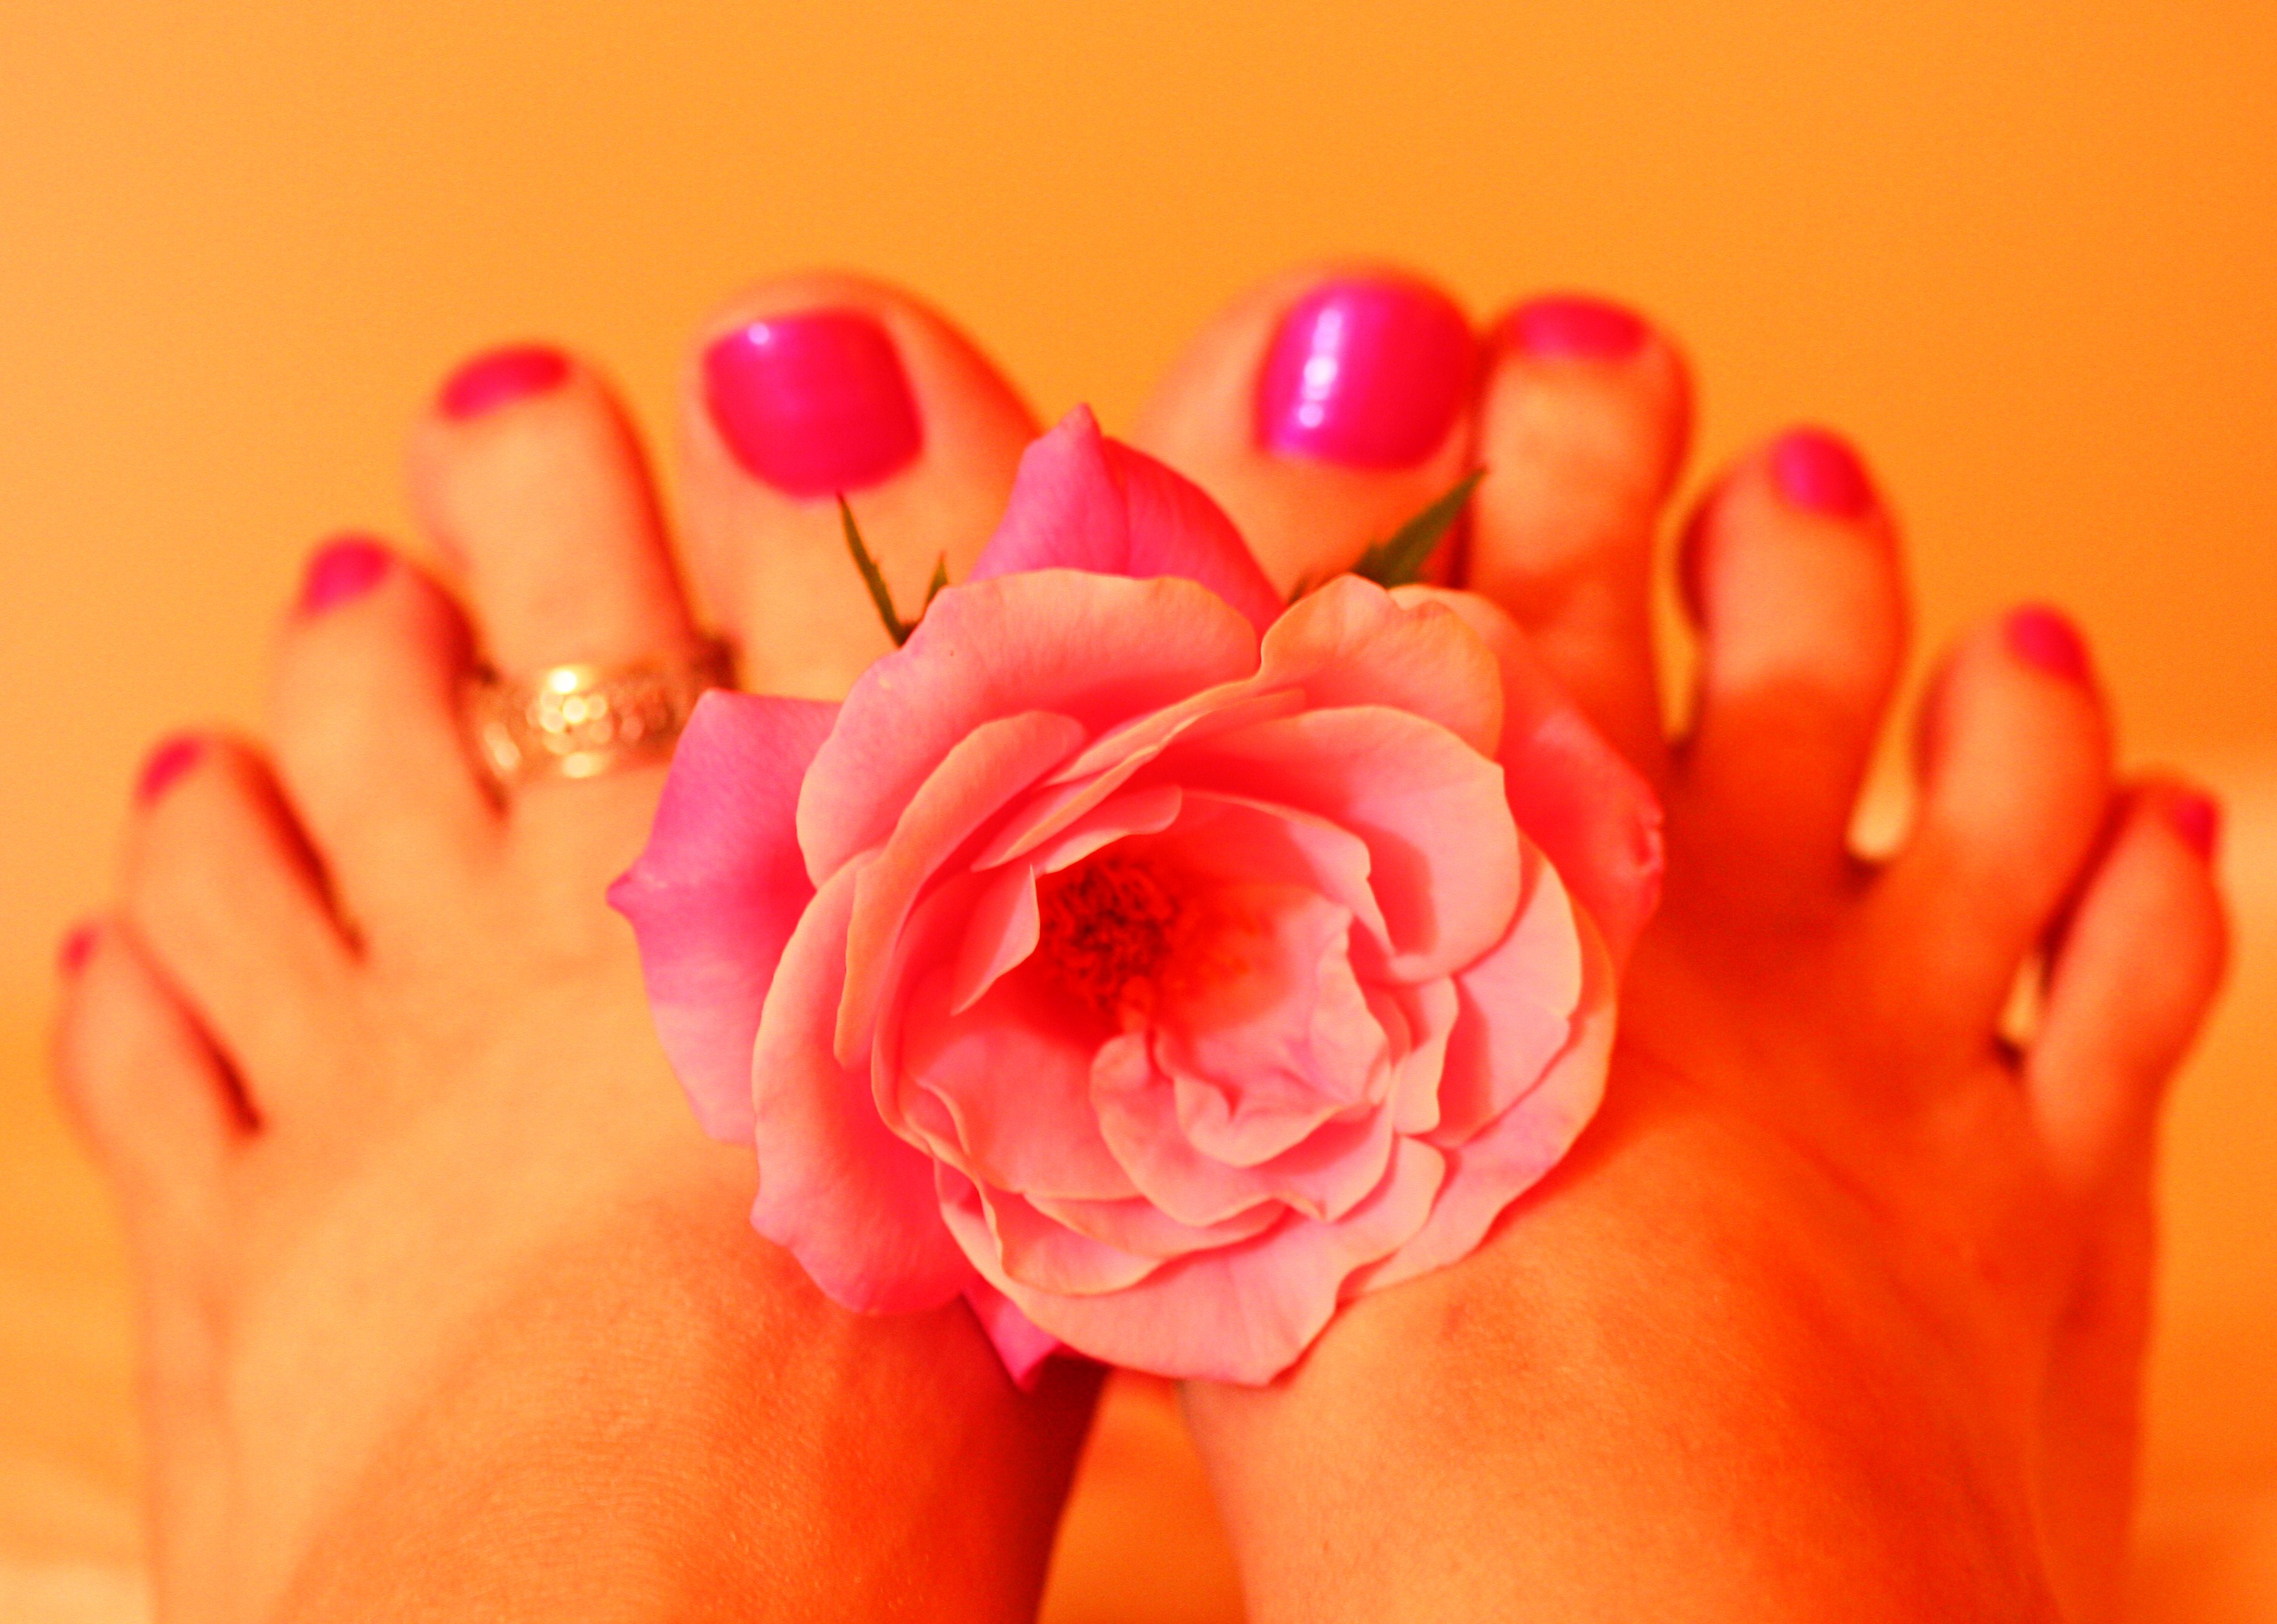 Woman_s_Feet_Holding_Pink_Rose_Fresh_Pedicure.jpeg